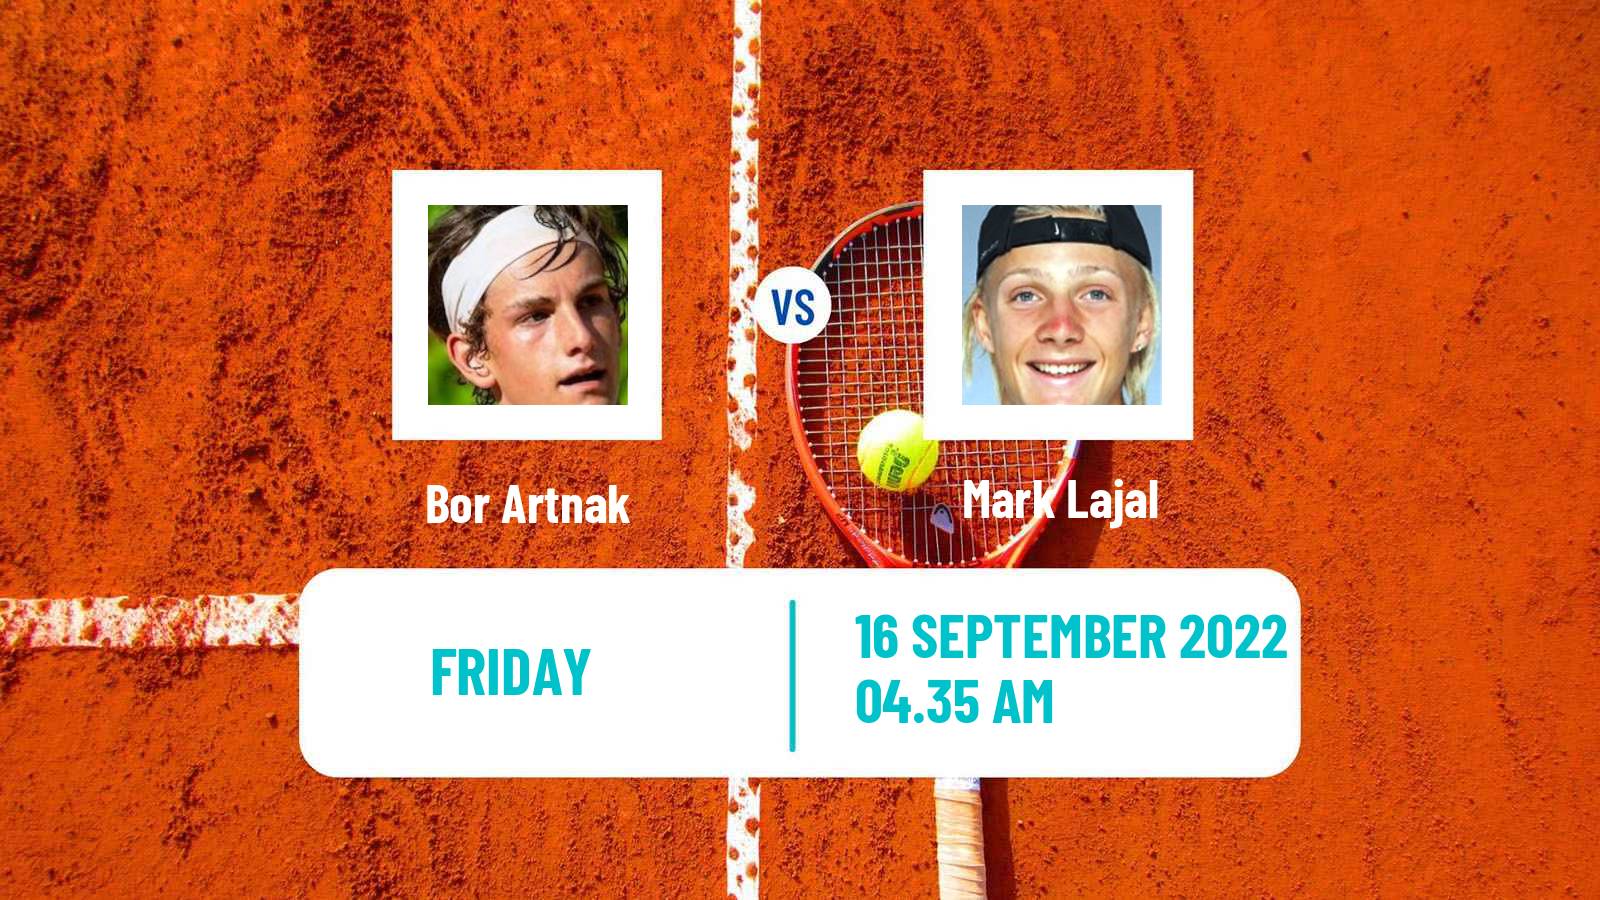 Tennis Davis Cup World Group II Bor Artnak - Mark Lajal